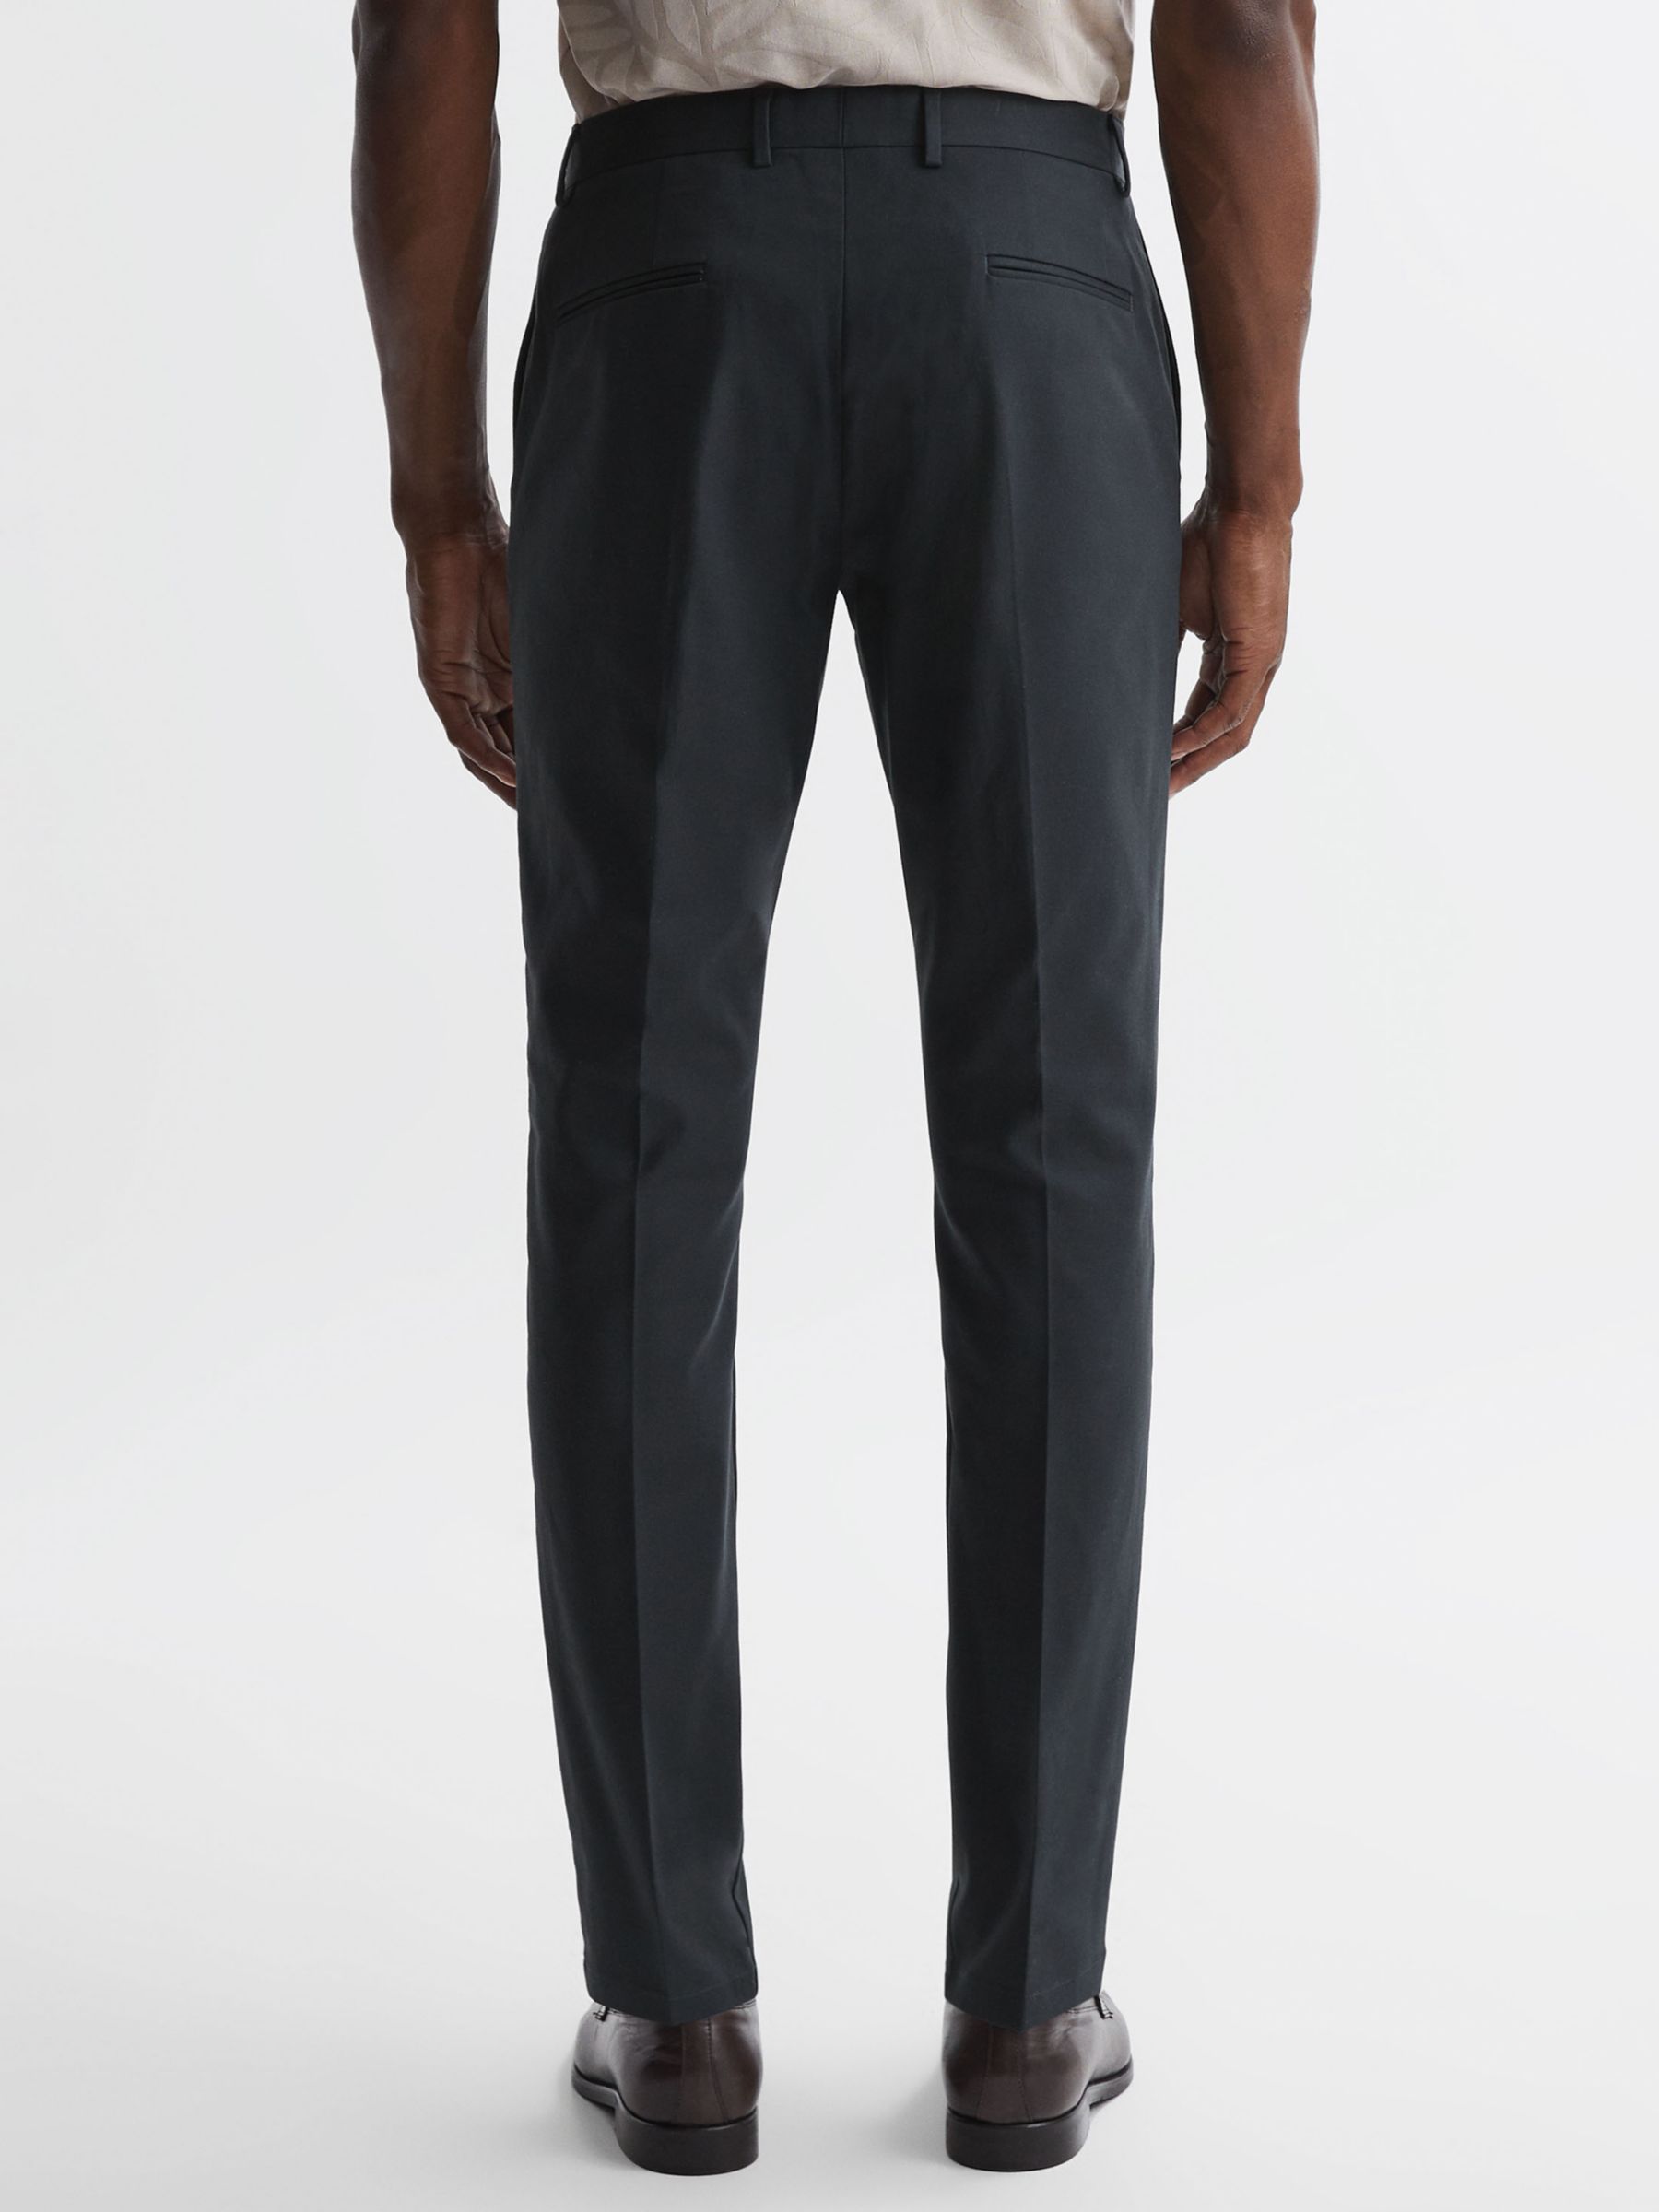 Reiss Eastbury Straight Fit Chino Trousers, Dark Grey, 36R